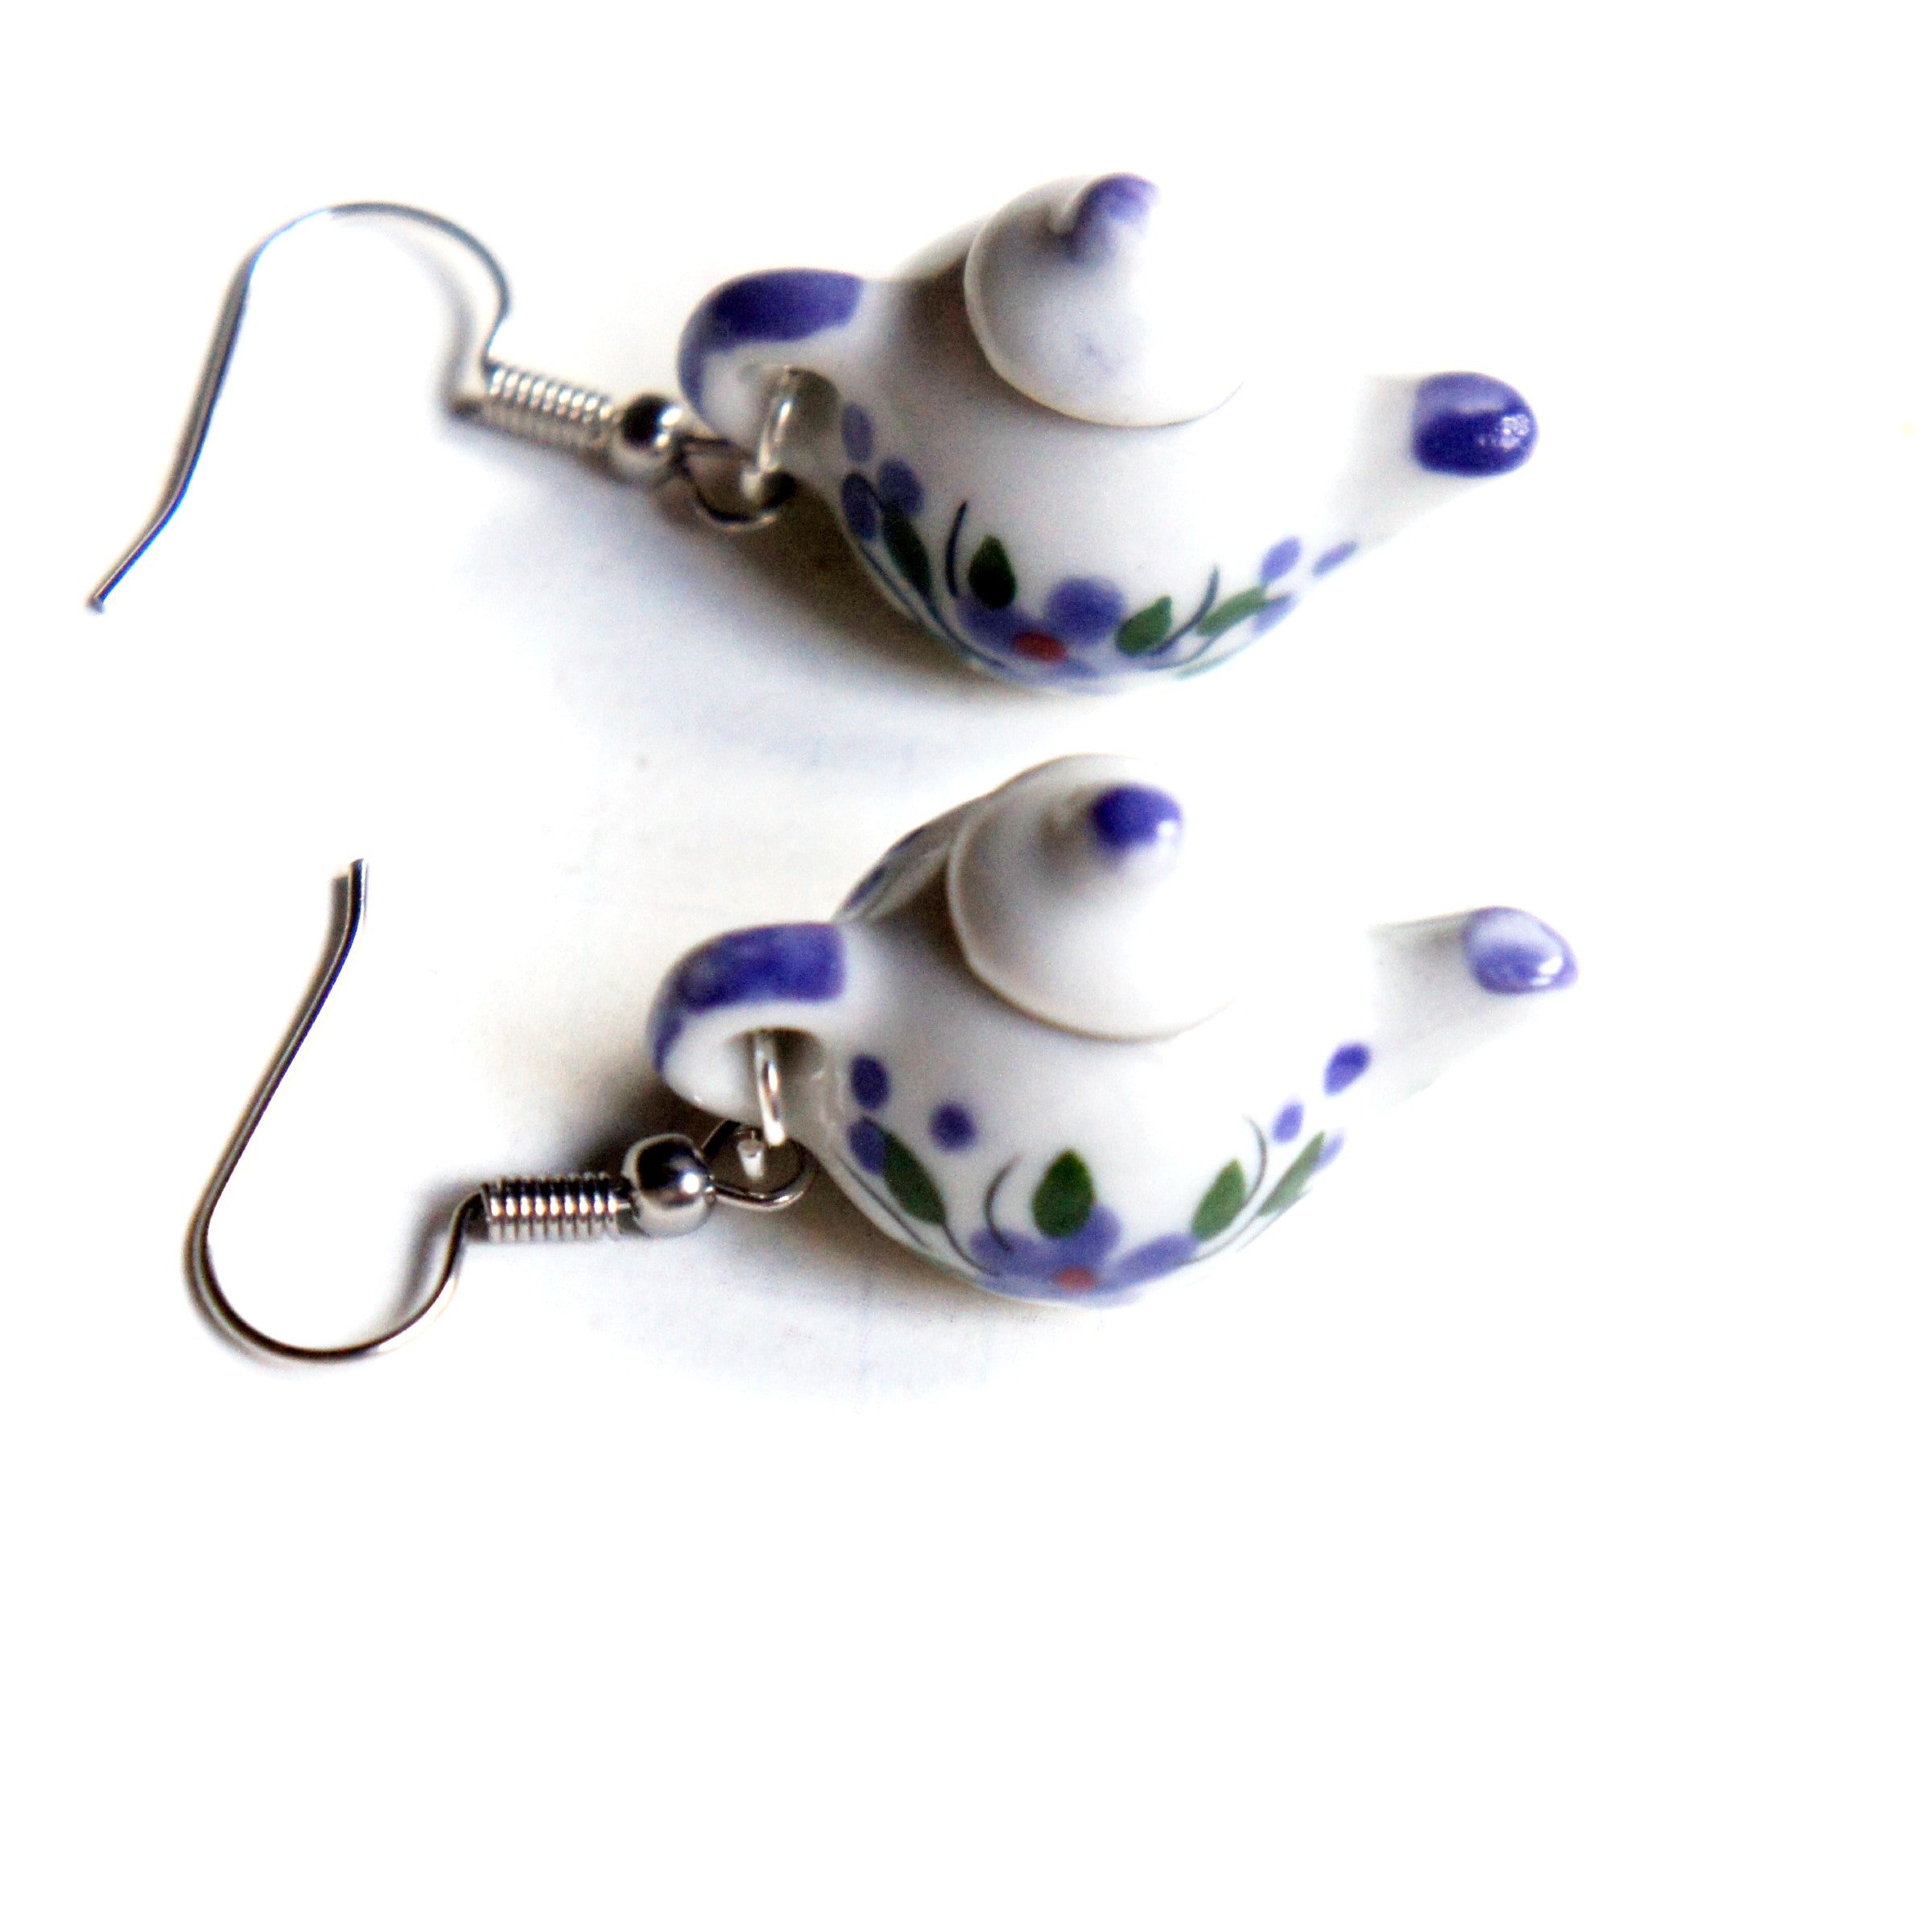 Tea pot Dangle Earrings - Jillicious charms and accessories